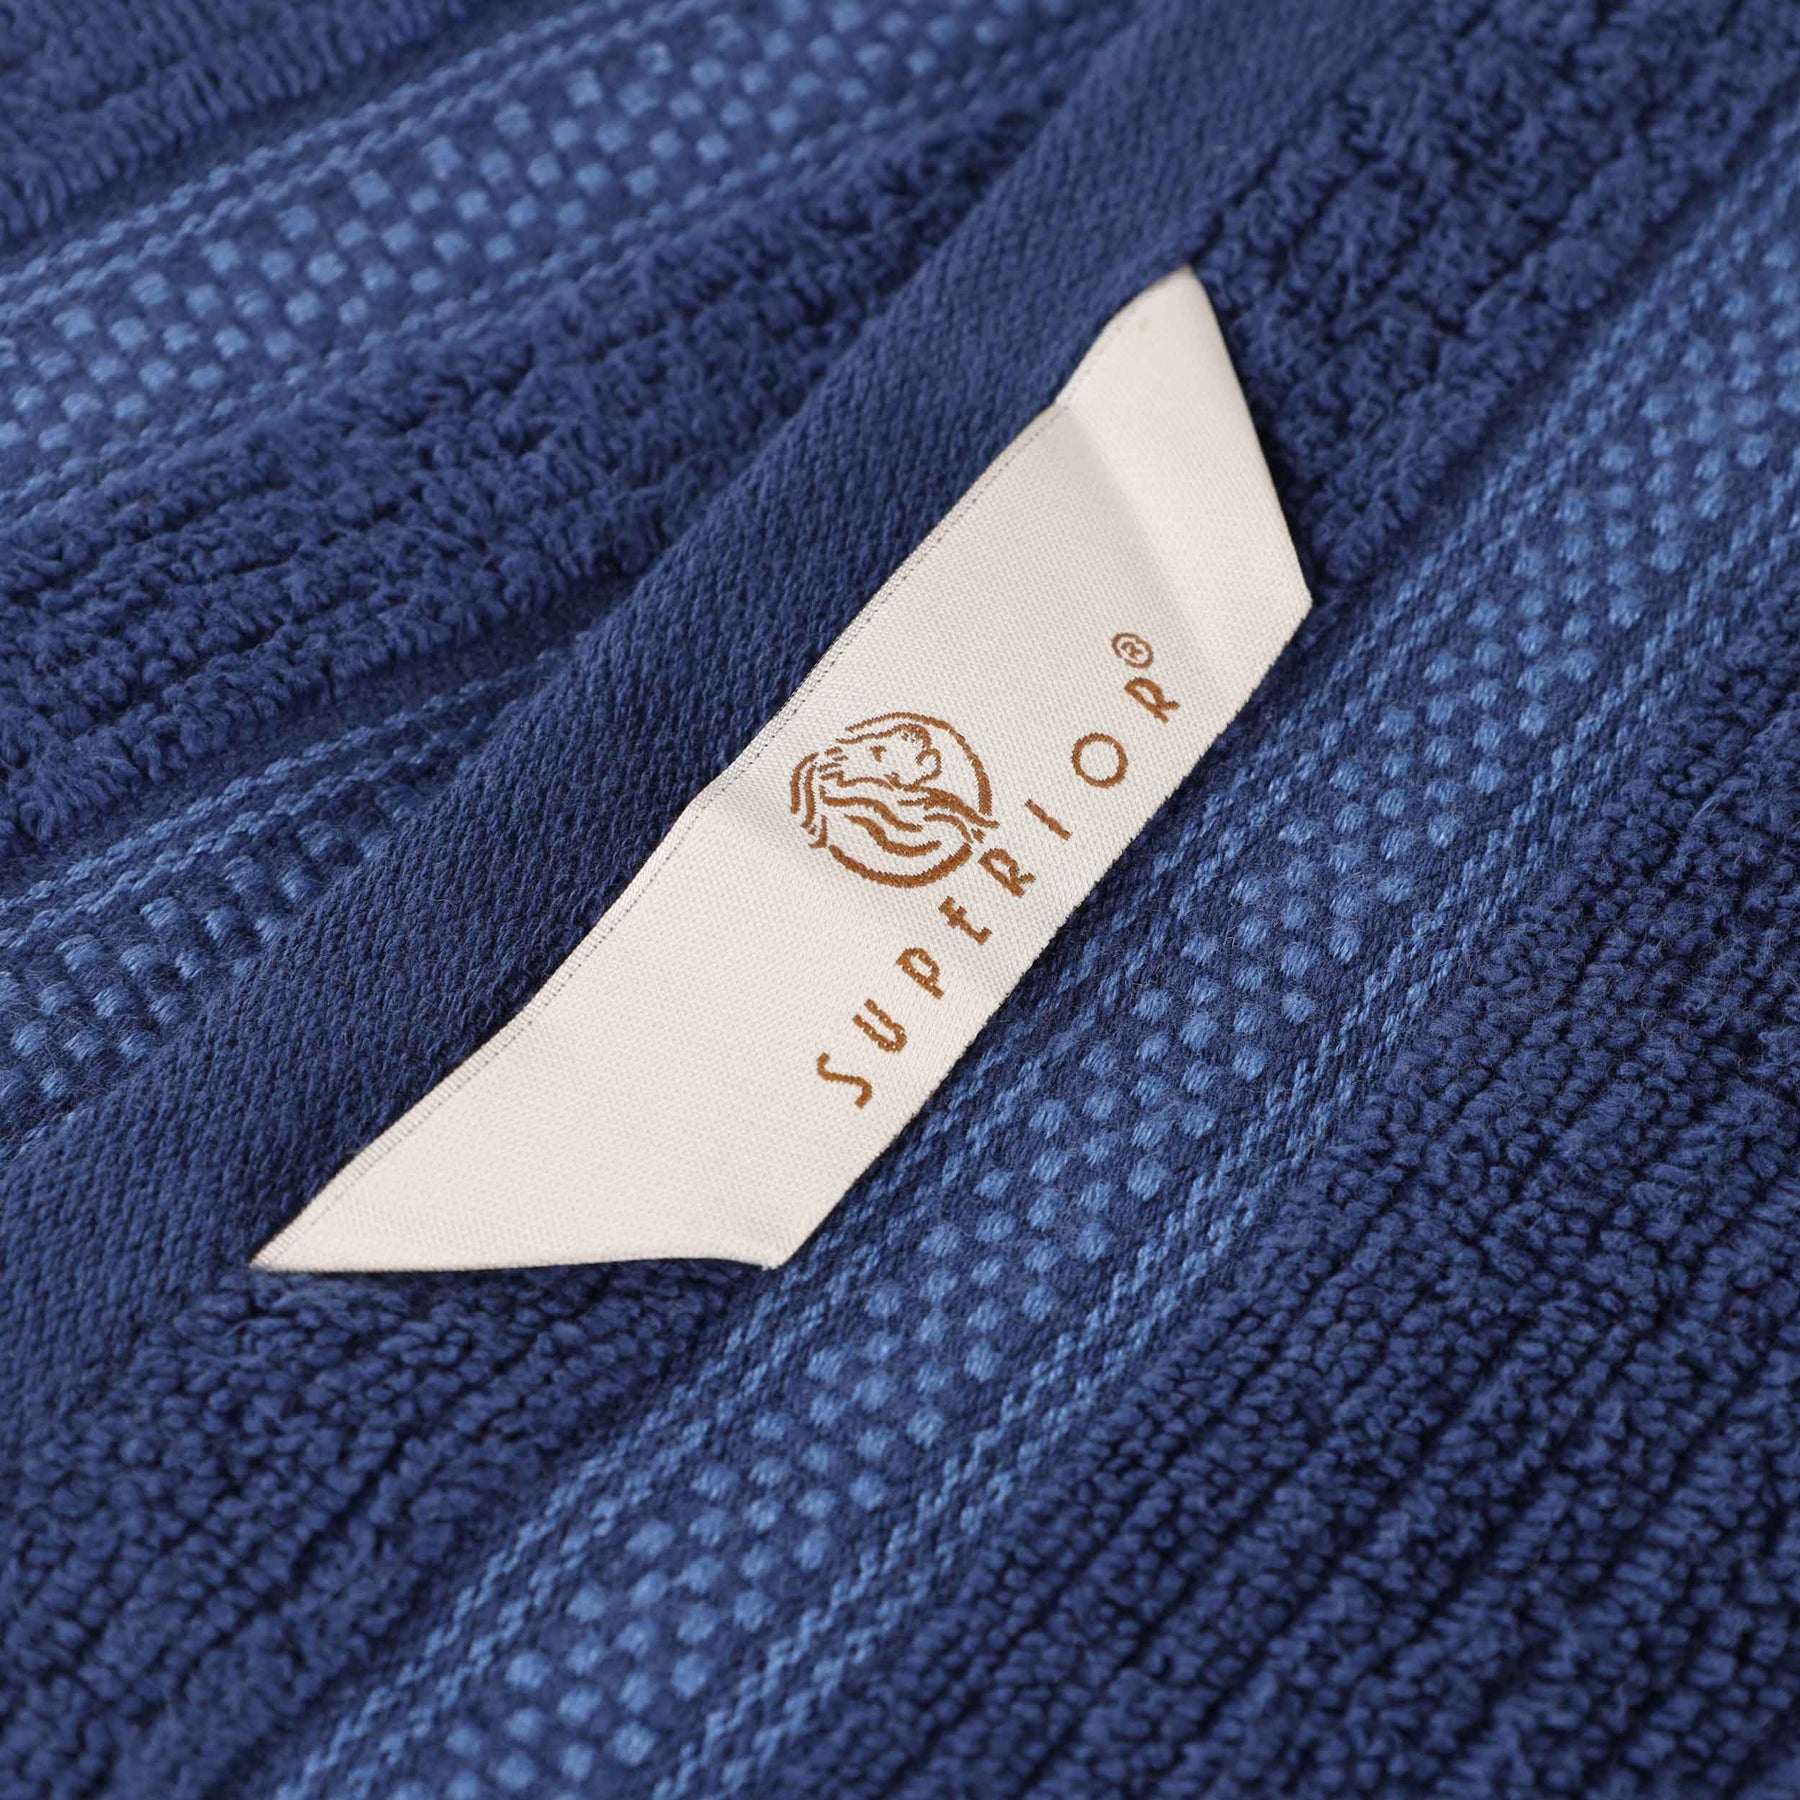 Zero Twist Cotton Ribbed Geometric Border Plush Face Towel - Navy Blue